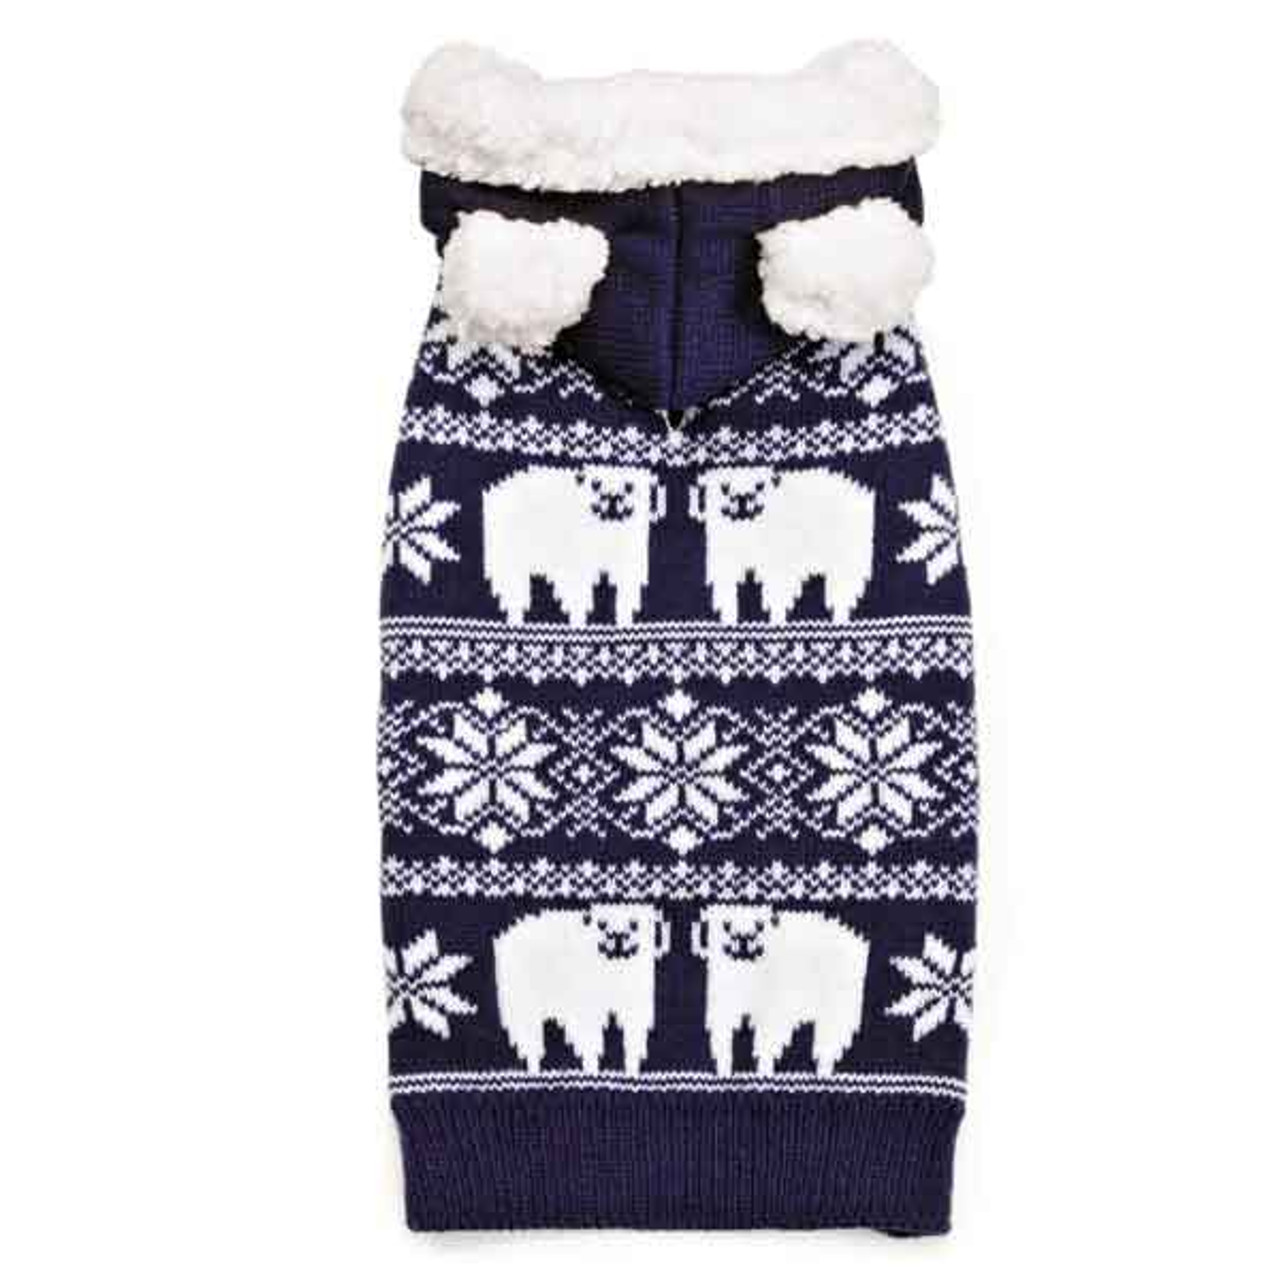 Image Elements Polar Bear Hood Sweater